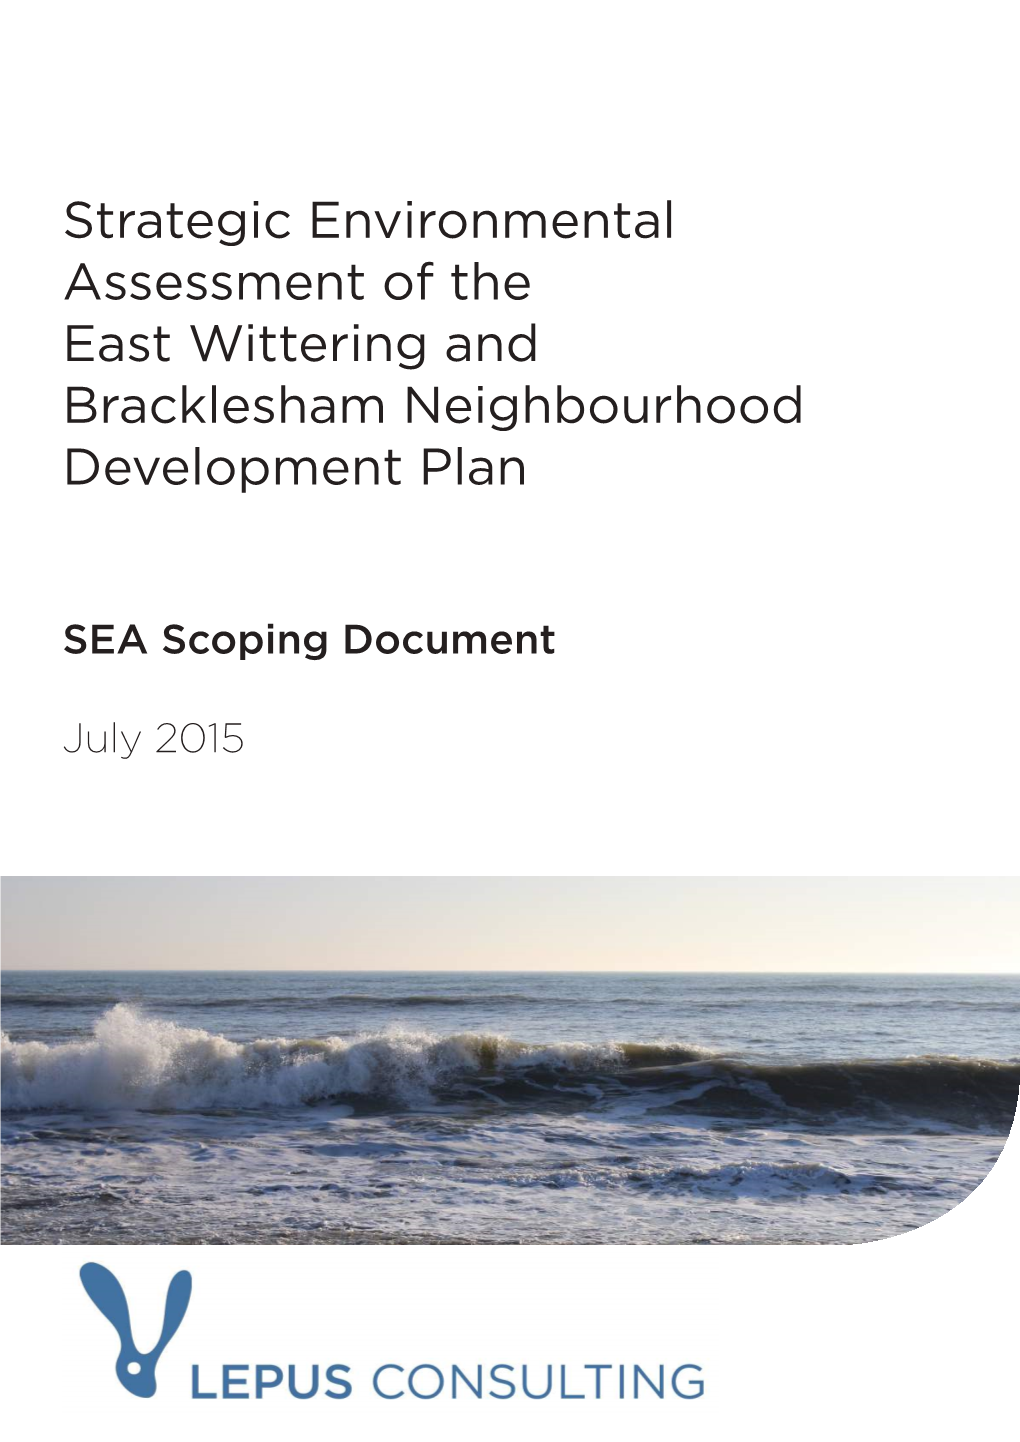 Strategic Environmental Assessment of the East Wittering and Bracklesham Neighbourhood Development Plan